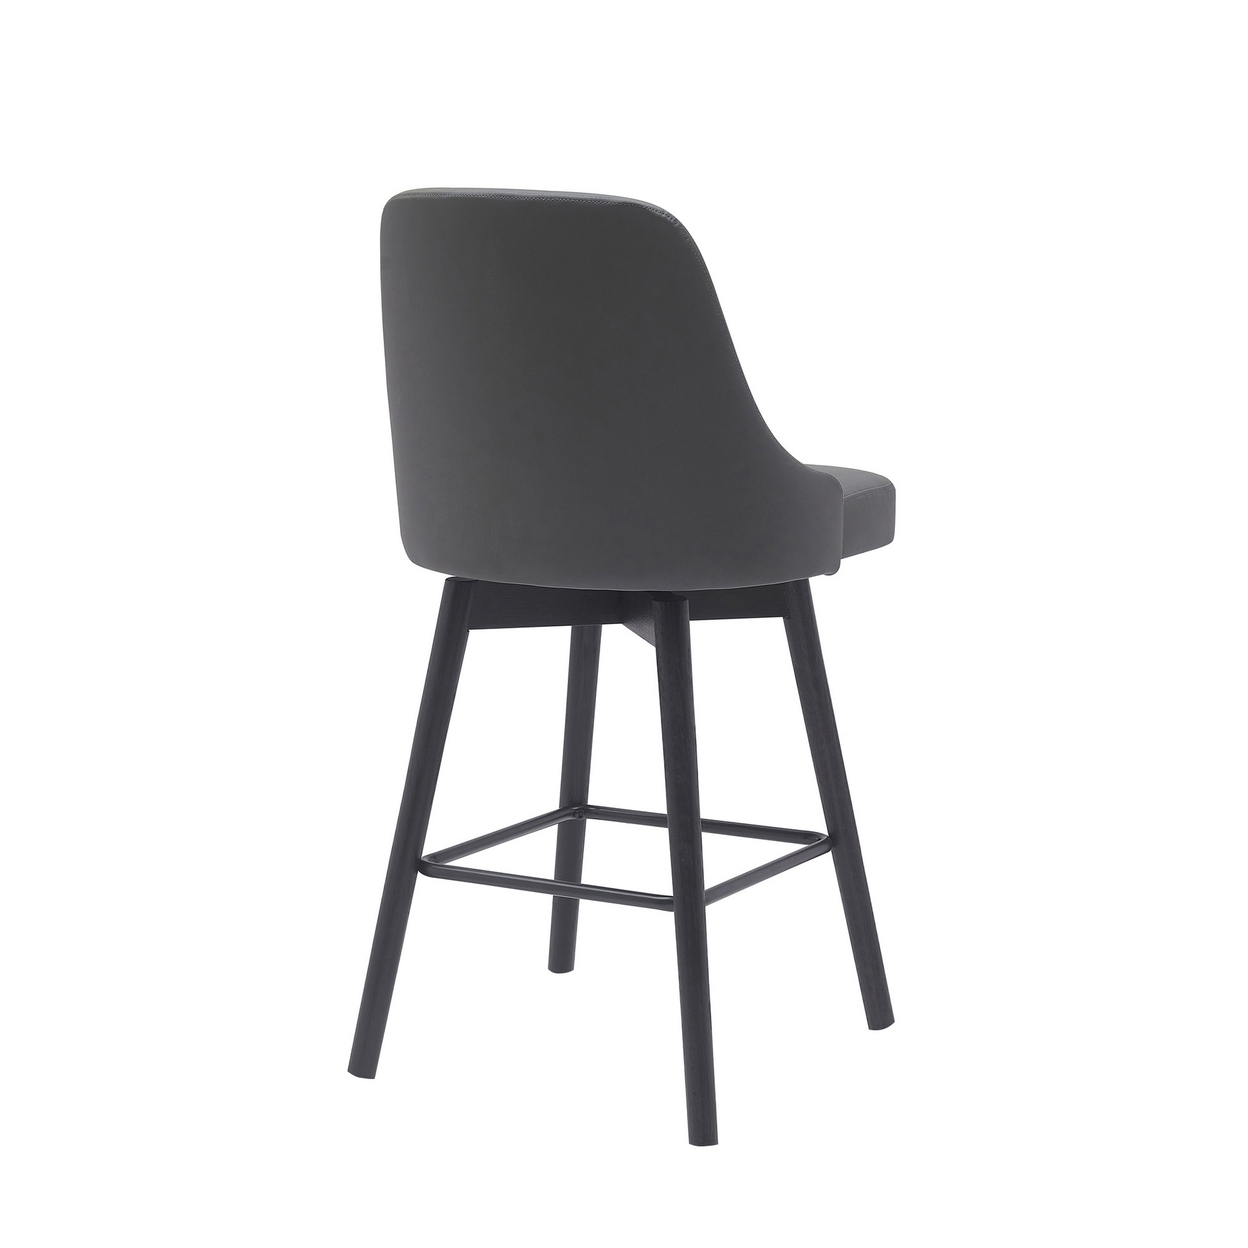 Sean 26 Inch Counter Stool Chair, Parson Style, Swivel, Gray Faux Leather - Saltoro Sherpi